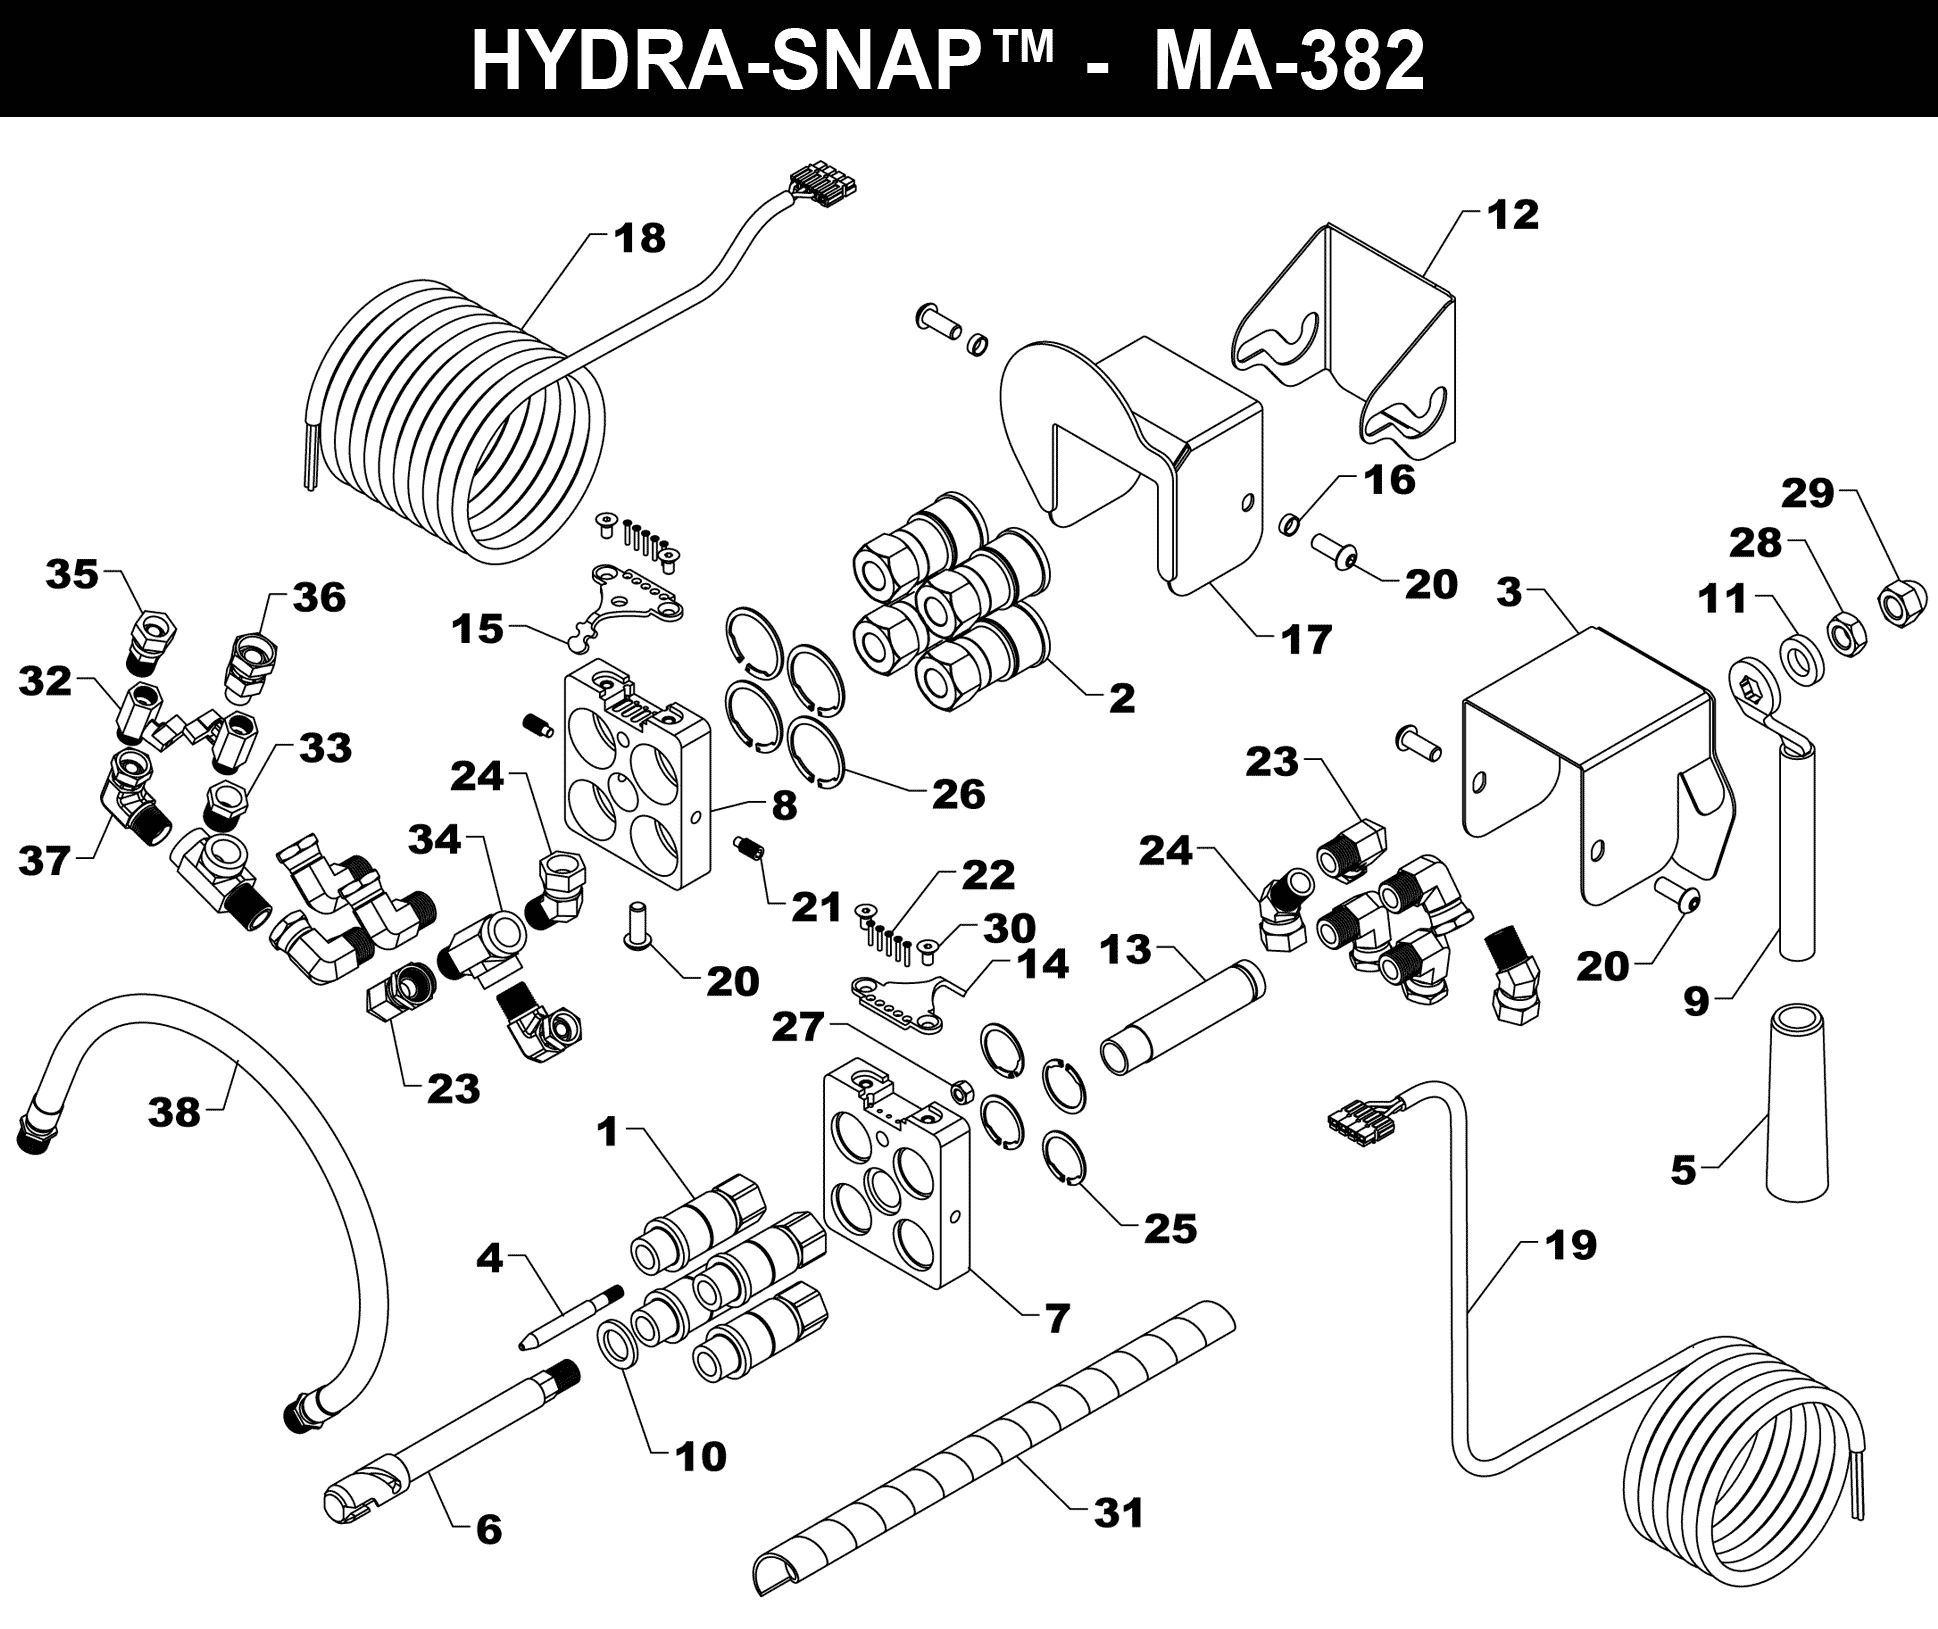 Hydra-Snap™ - MA-382